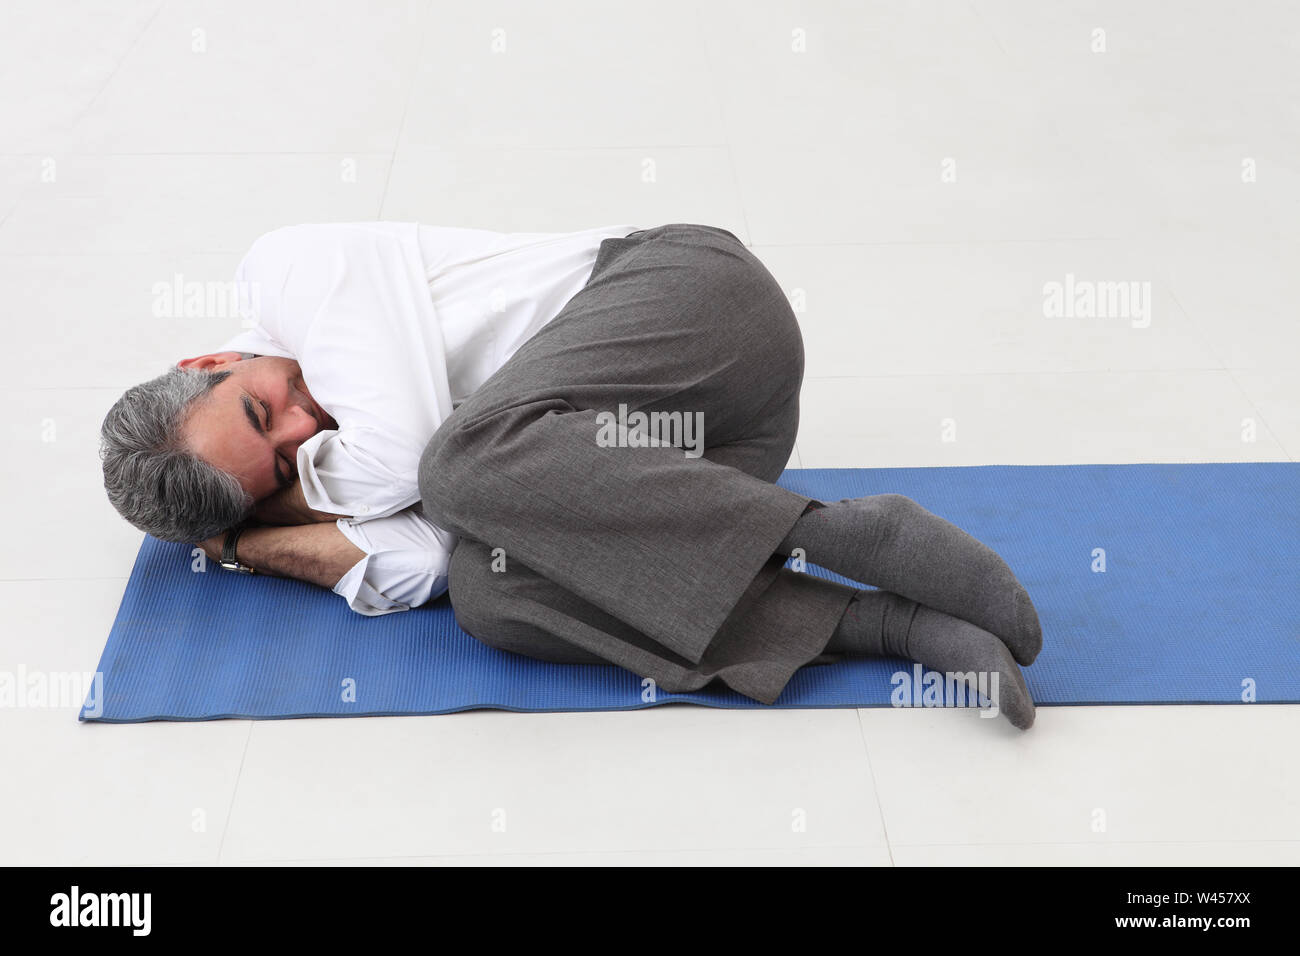 Businessman Sleeping On Floor Mat Stock Photo 260730146 Alamy